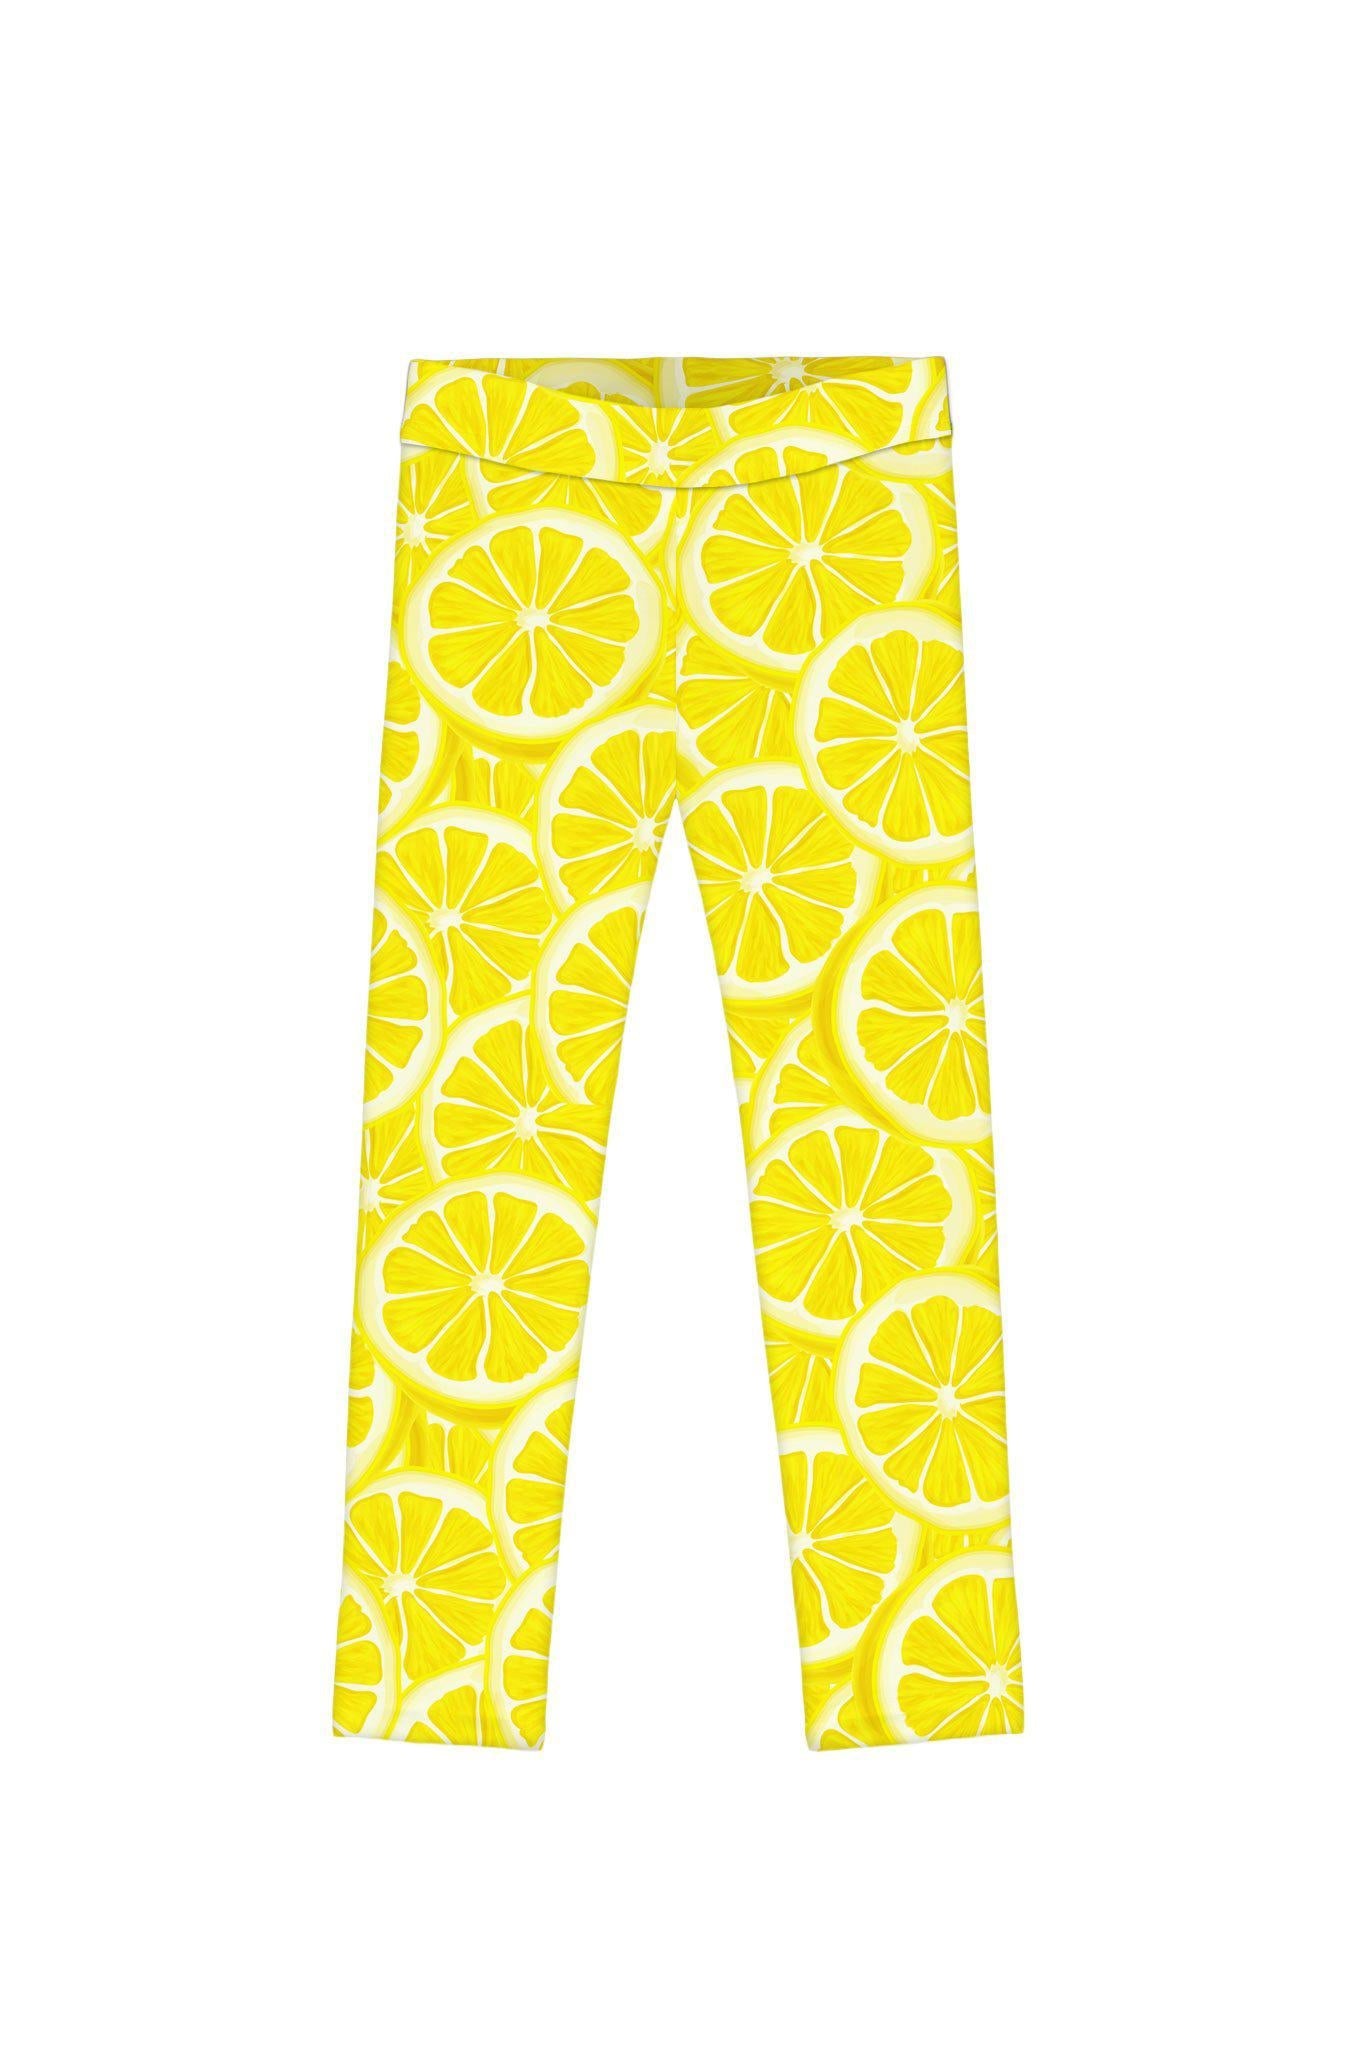 A Piece of Sun Lucy Yellow Lemon Print Cute Summer Leggings - Girls - Pineapple Clothing